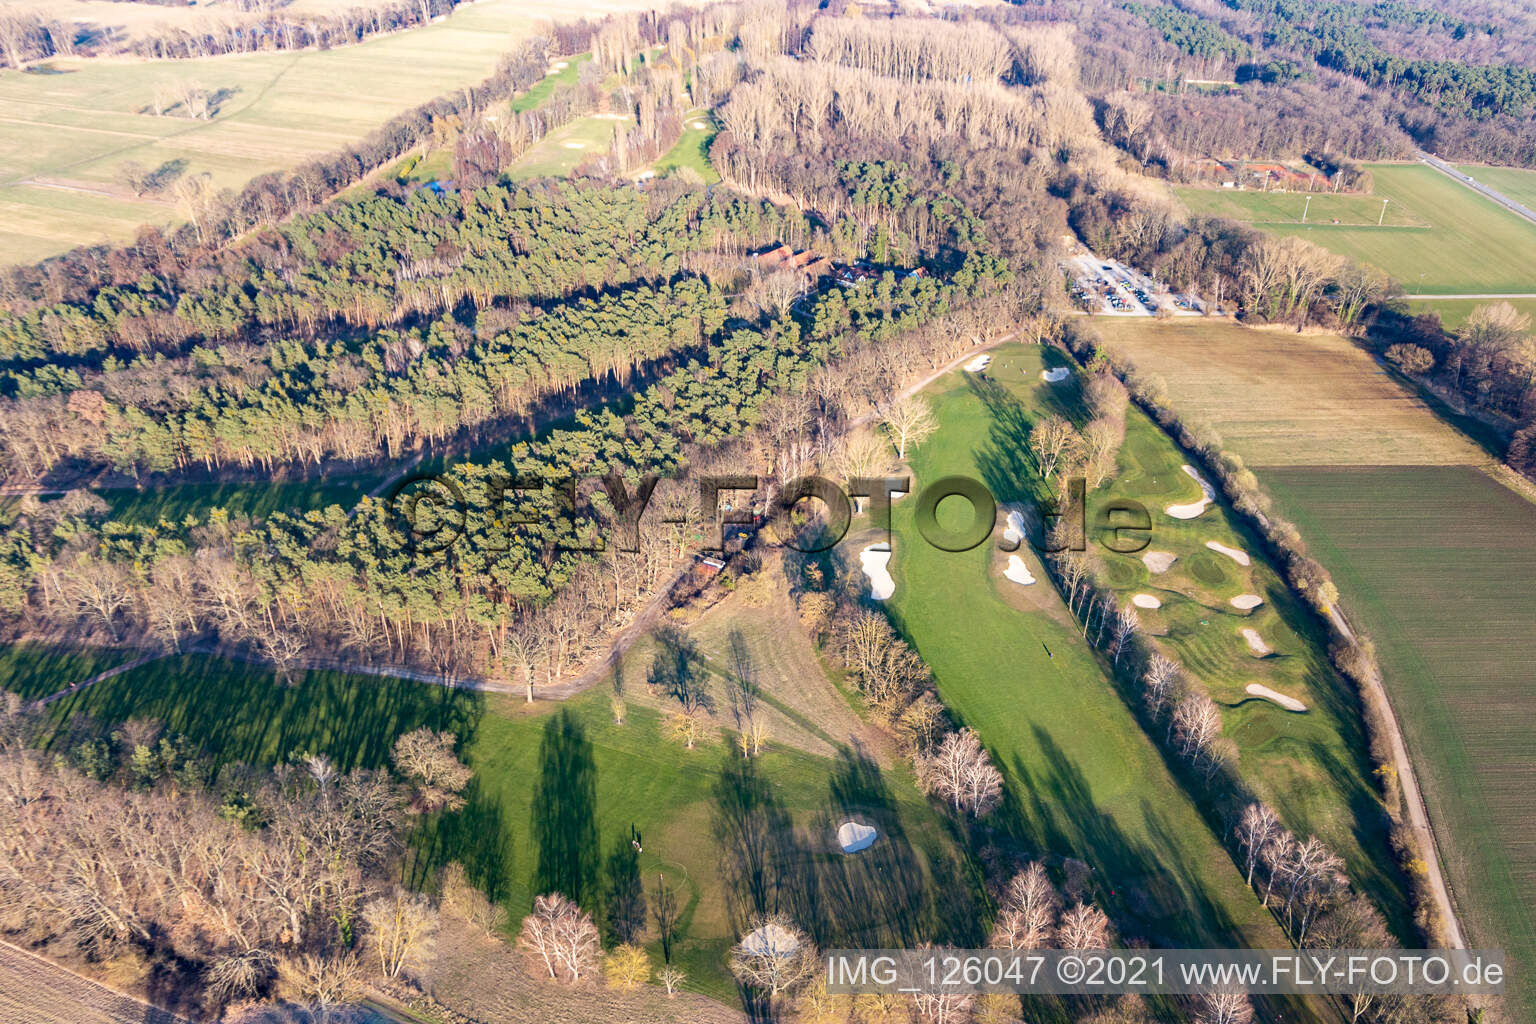 Vue aérienne de Terrain du Golf Club Pfalz à le quartier Geinsheim in Neustadt an der Weinstraße dans le département Rhénanie-Palatinat, Allemagne